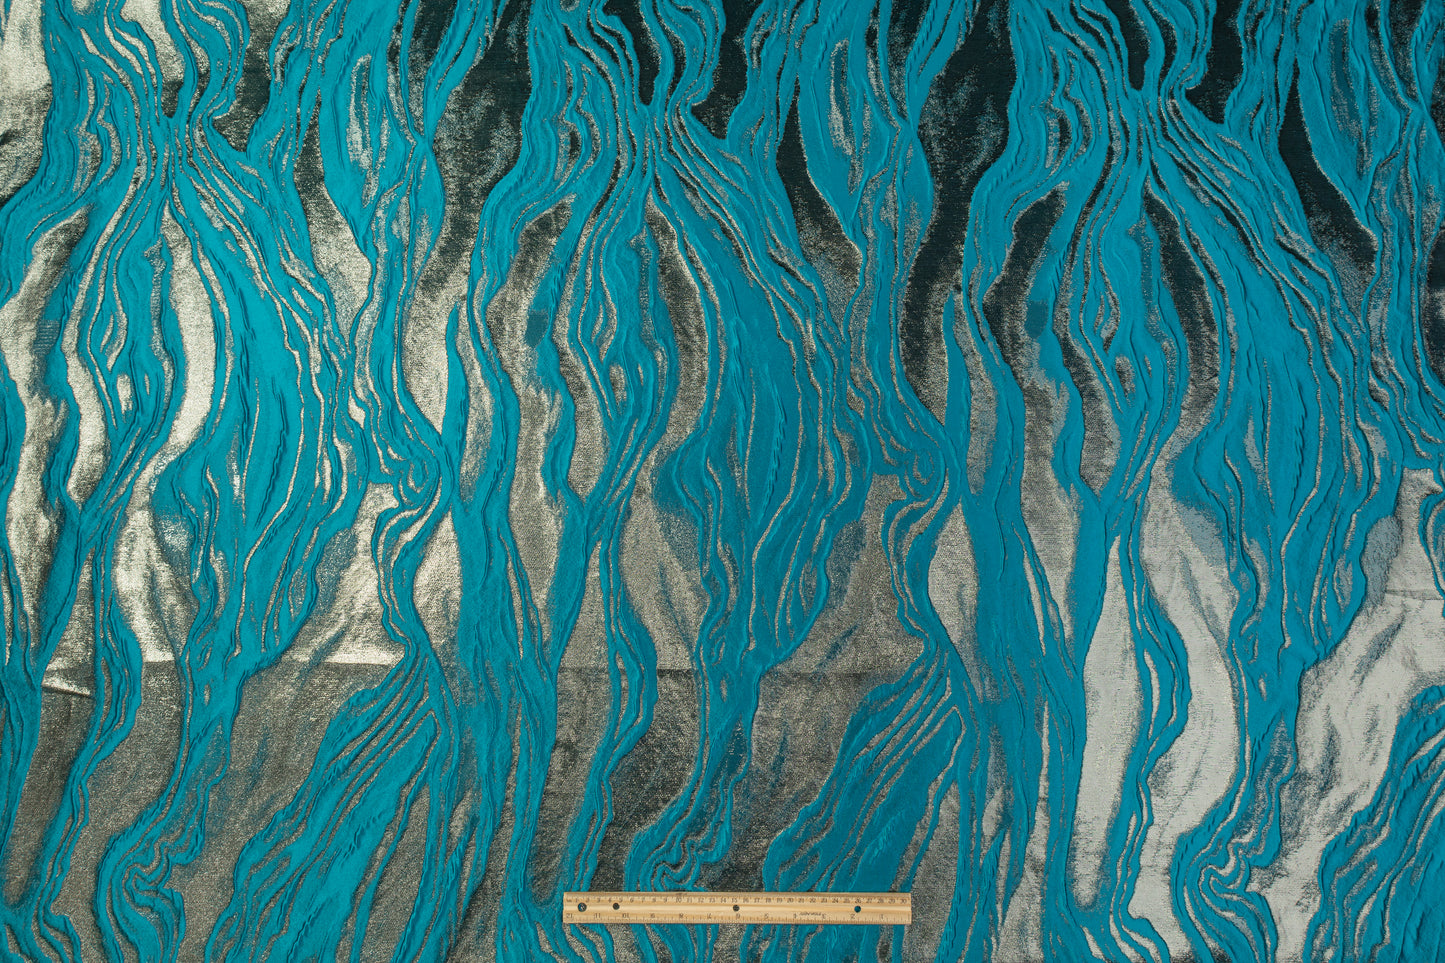 Abstract Metallic Italian Cloqué Brocade - Teal Blue